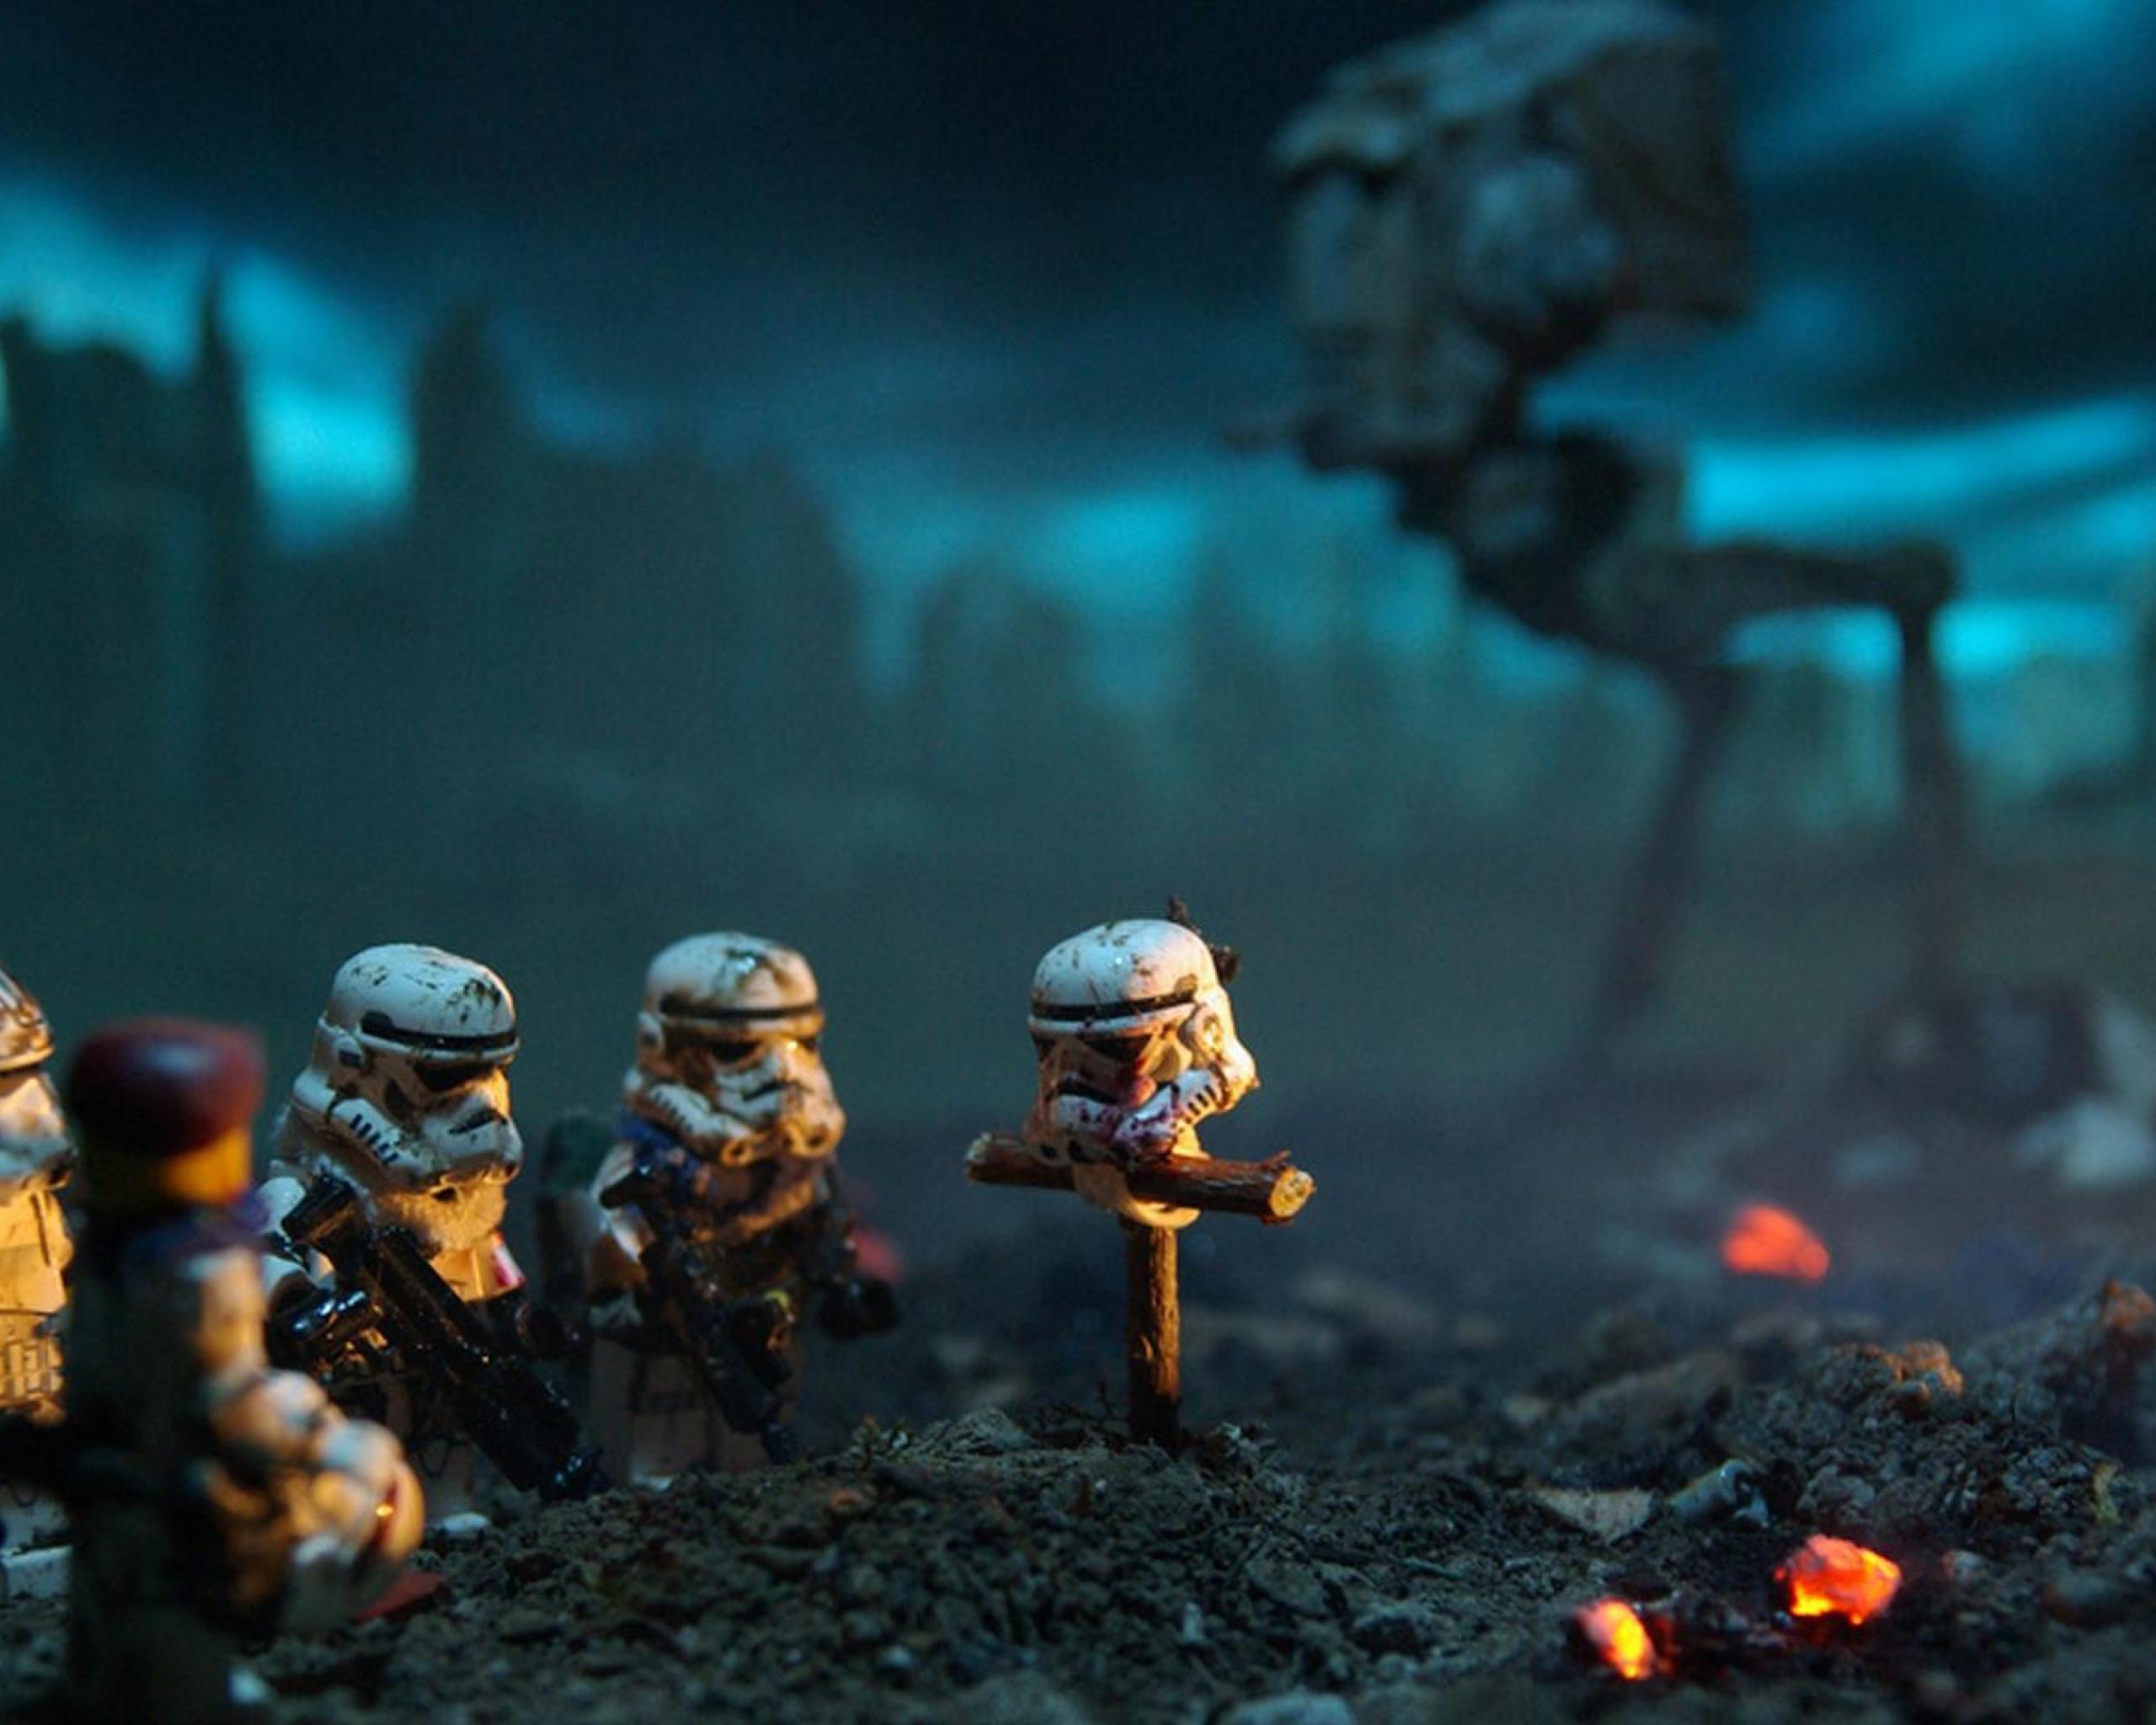 Star wars Miniatures Battlefield Stormtrooper Lego Lego star wars